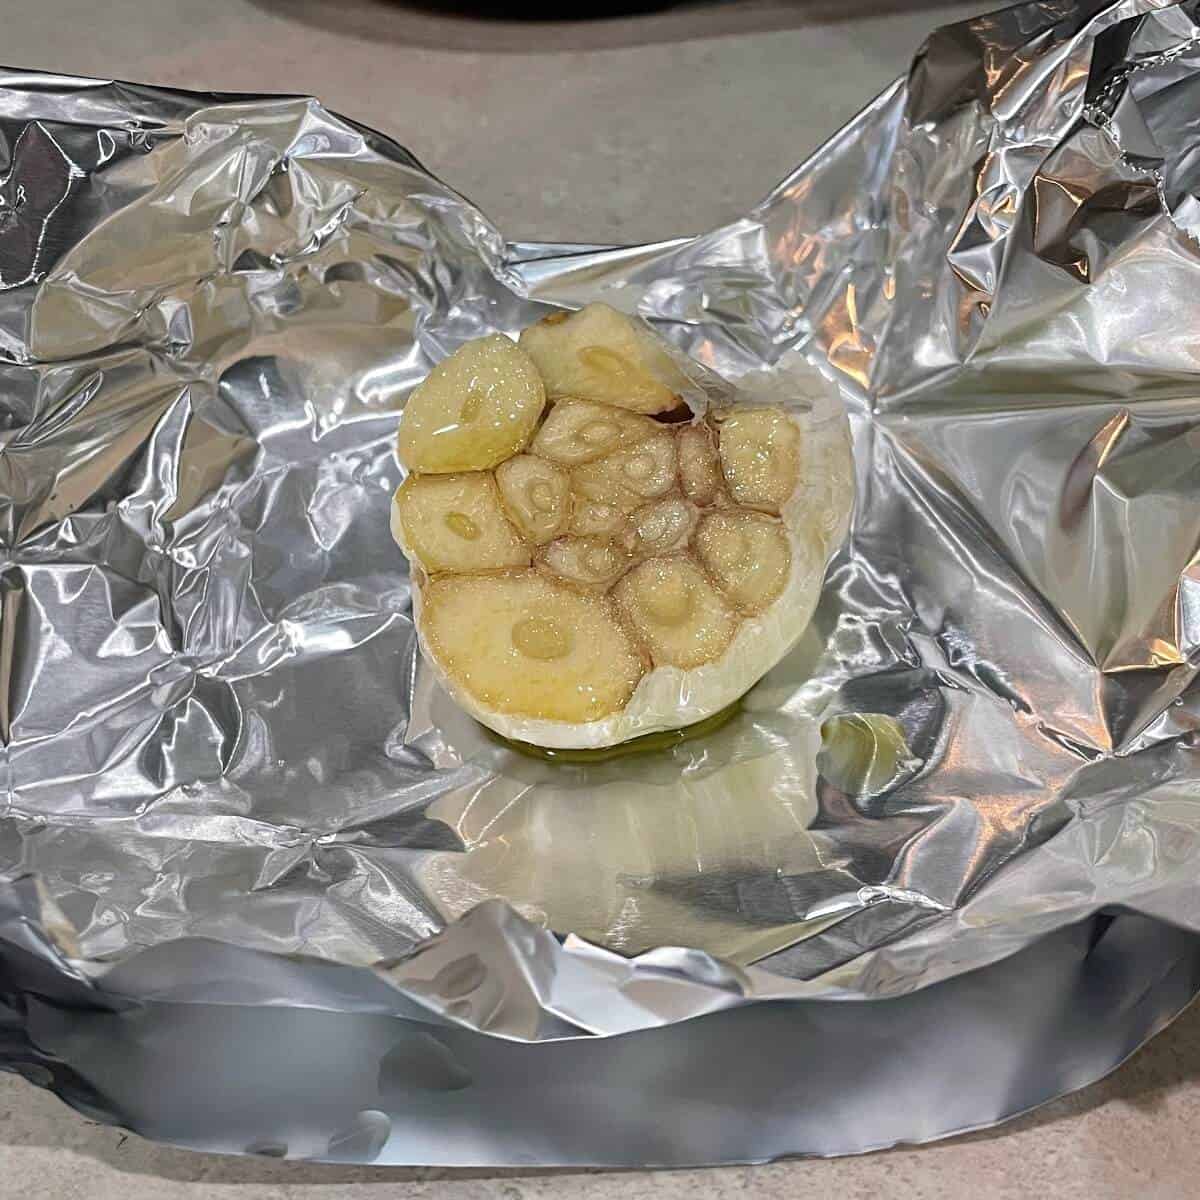 How to Roast Garlic in Air Fryer